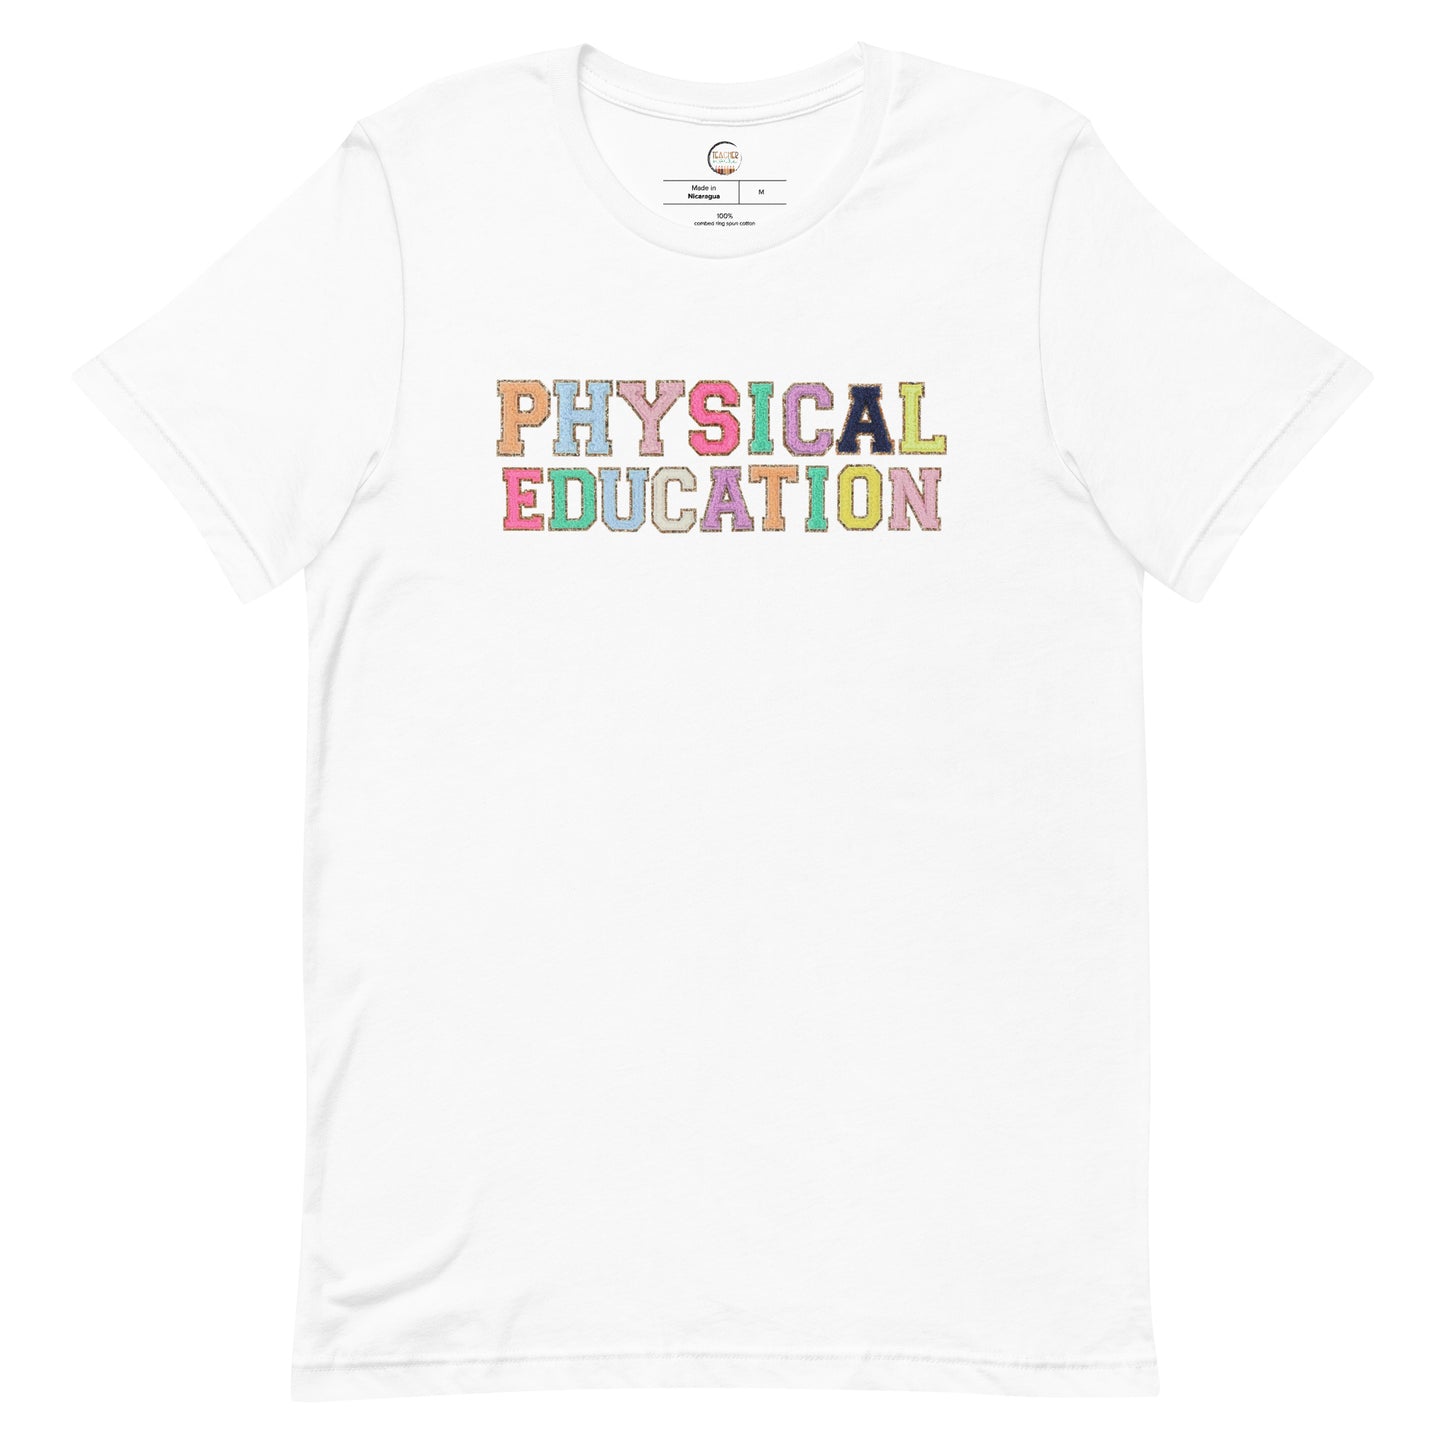 Physical Education Teacher Tshirt (faux letter patches)